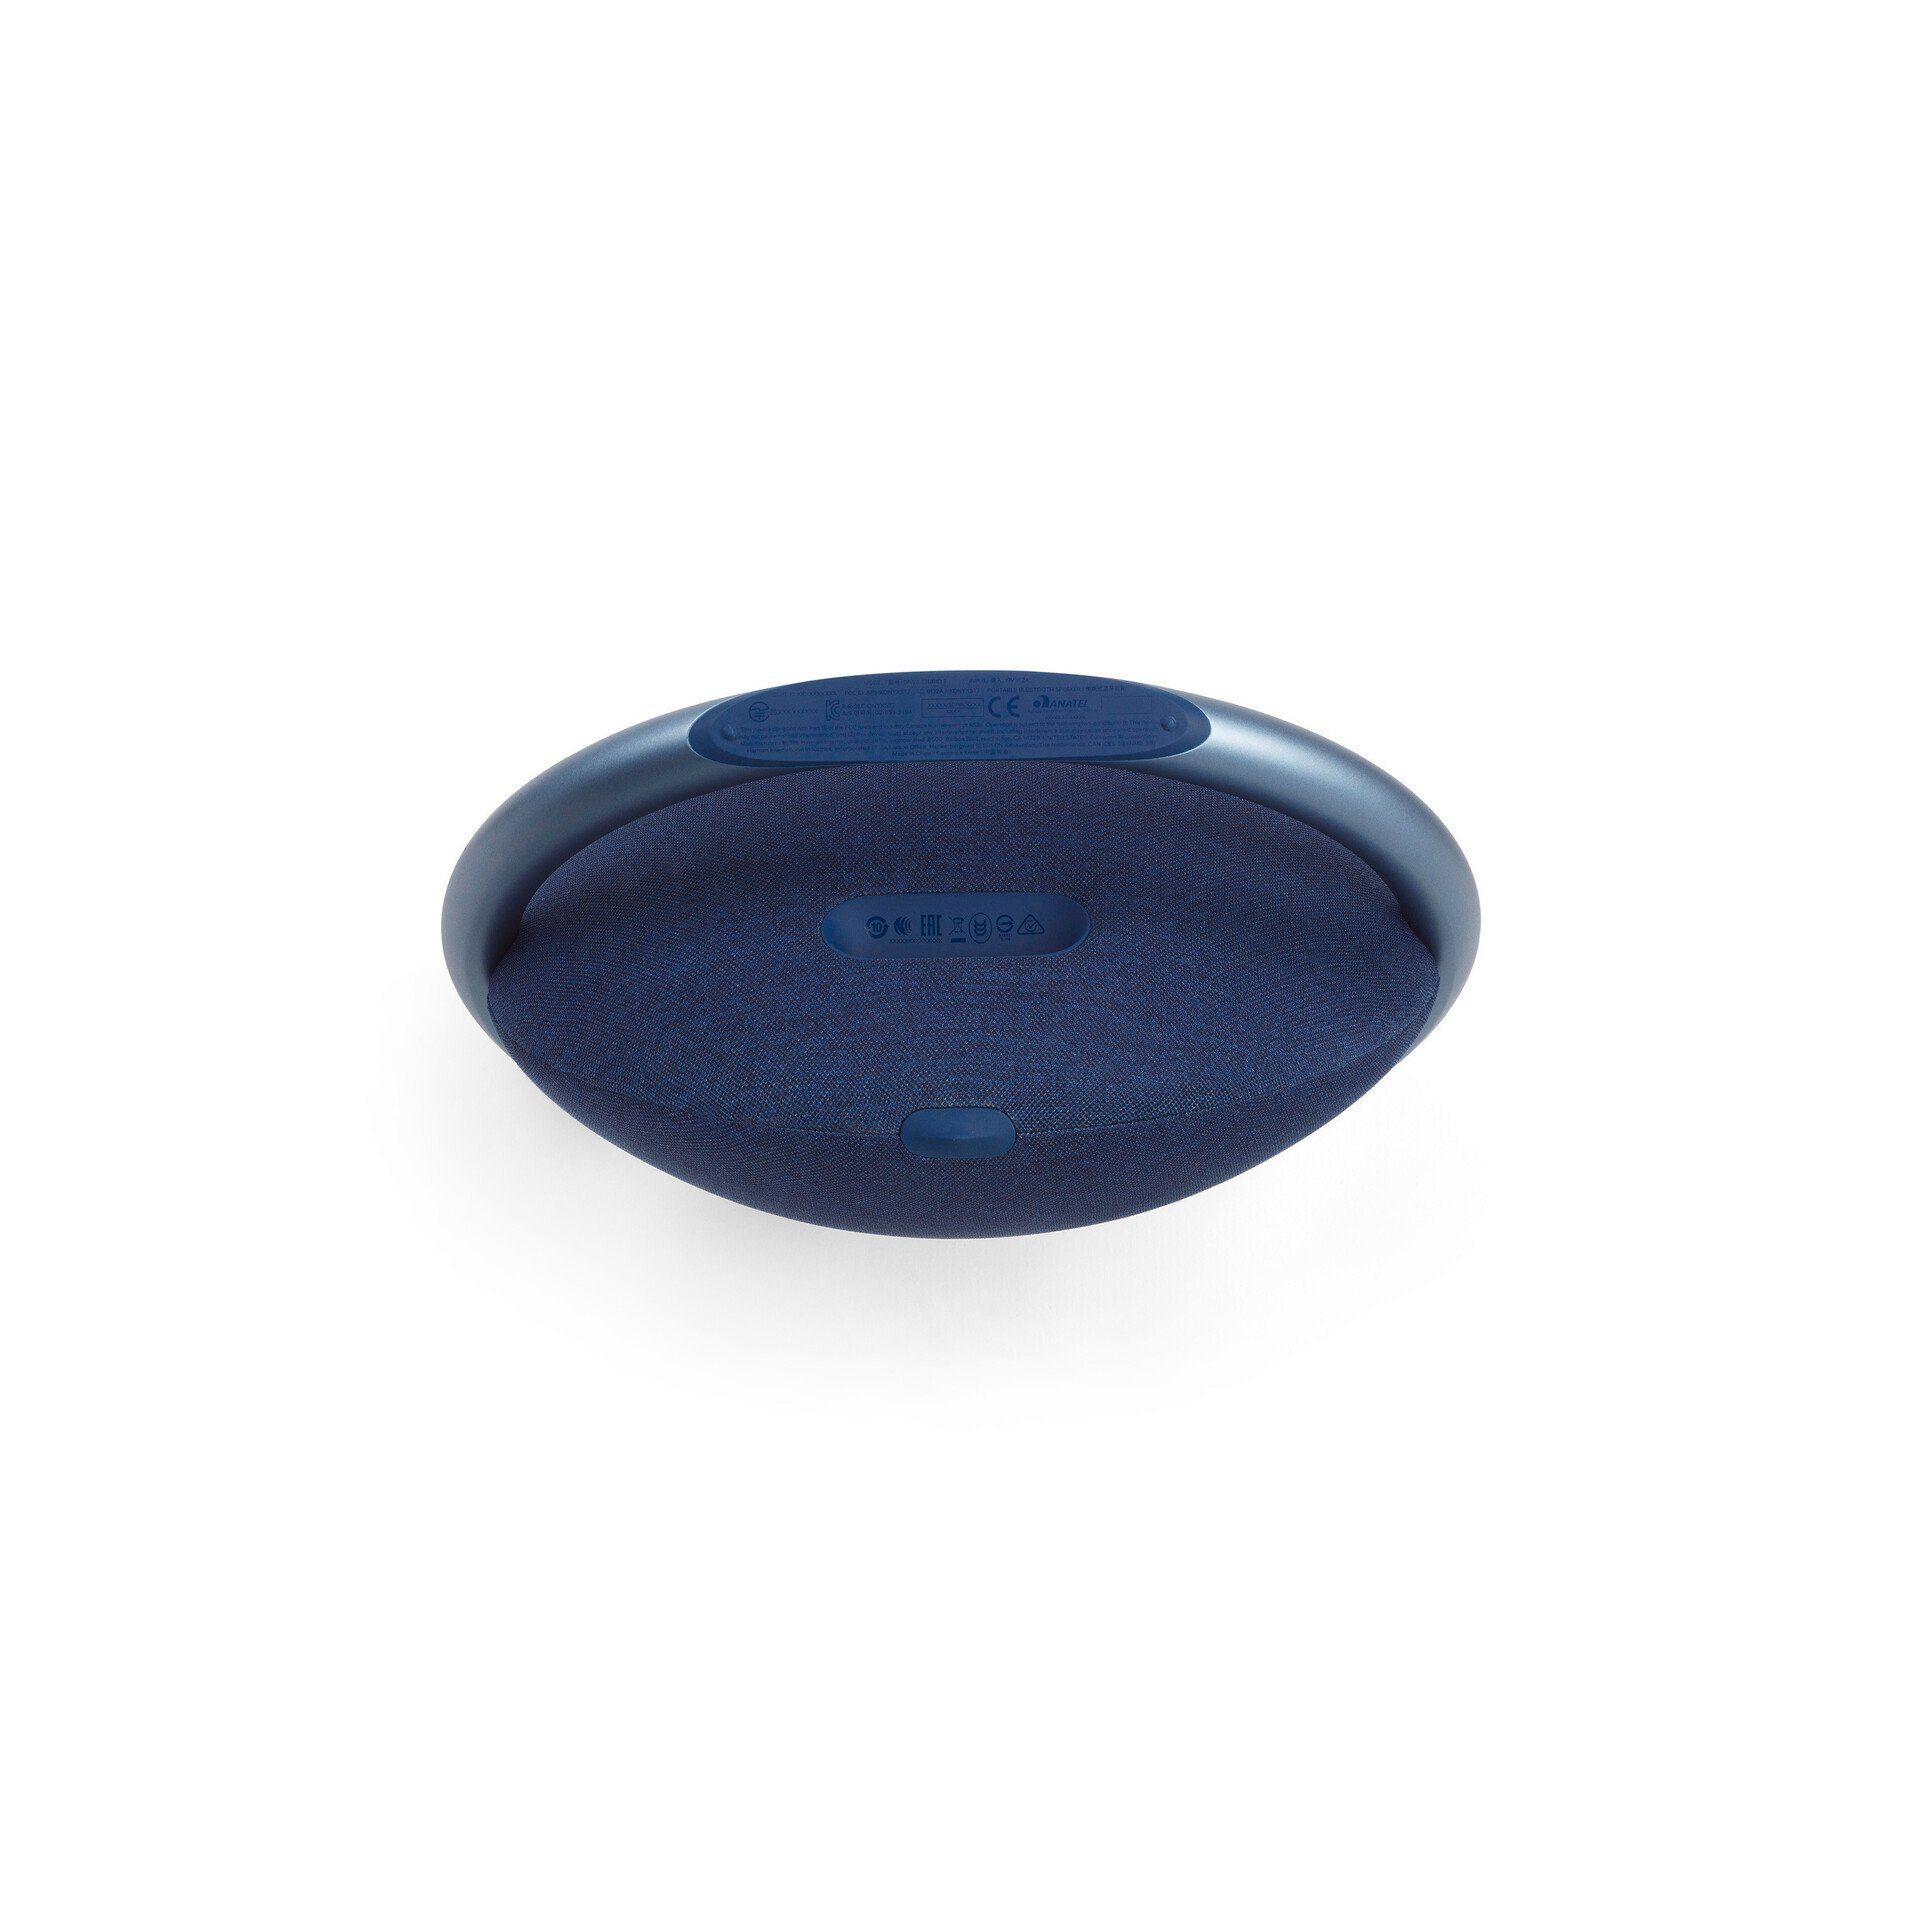 Harman/Kardon ONYX STUDIO 7 Lautsprecher (A2DP 50 Bluetooth, blau Bluetooth, W) AVRCP